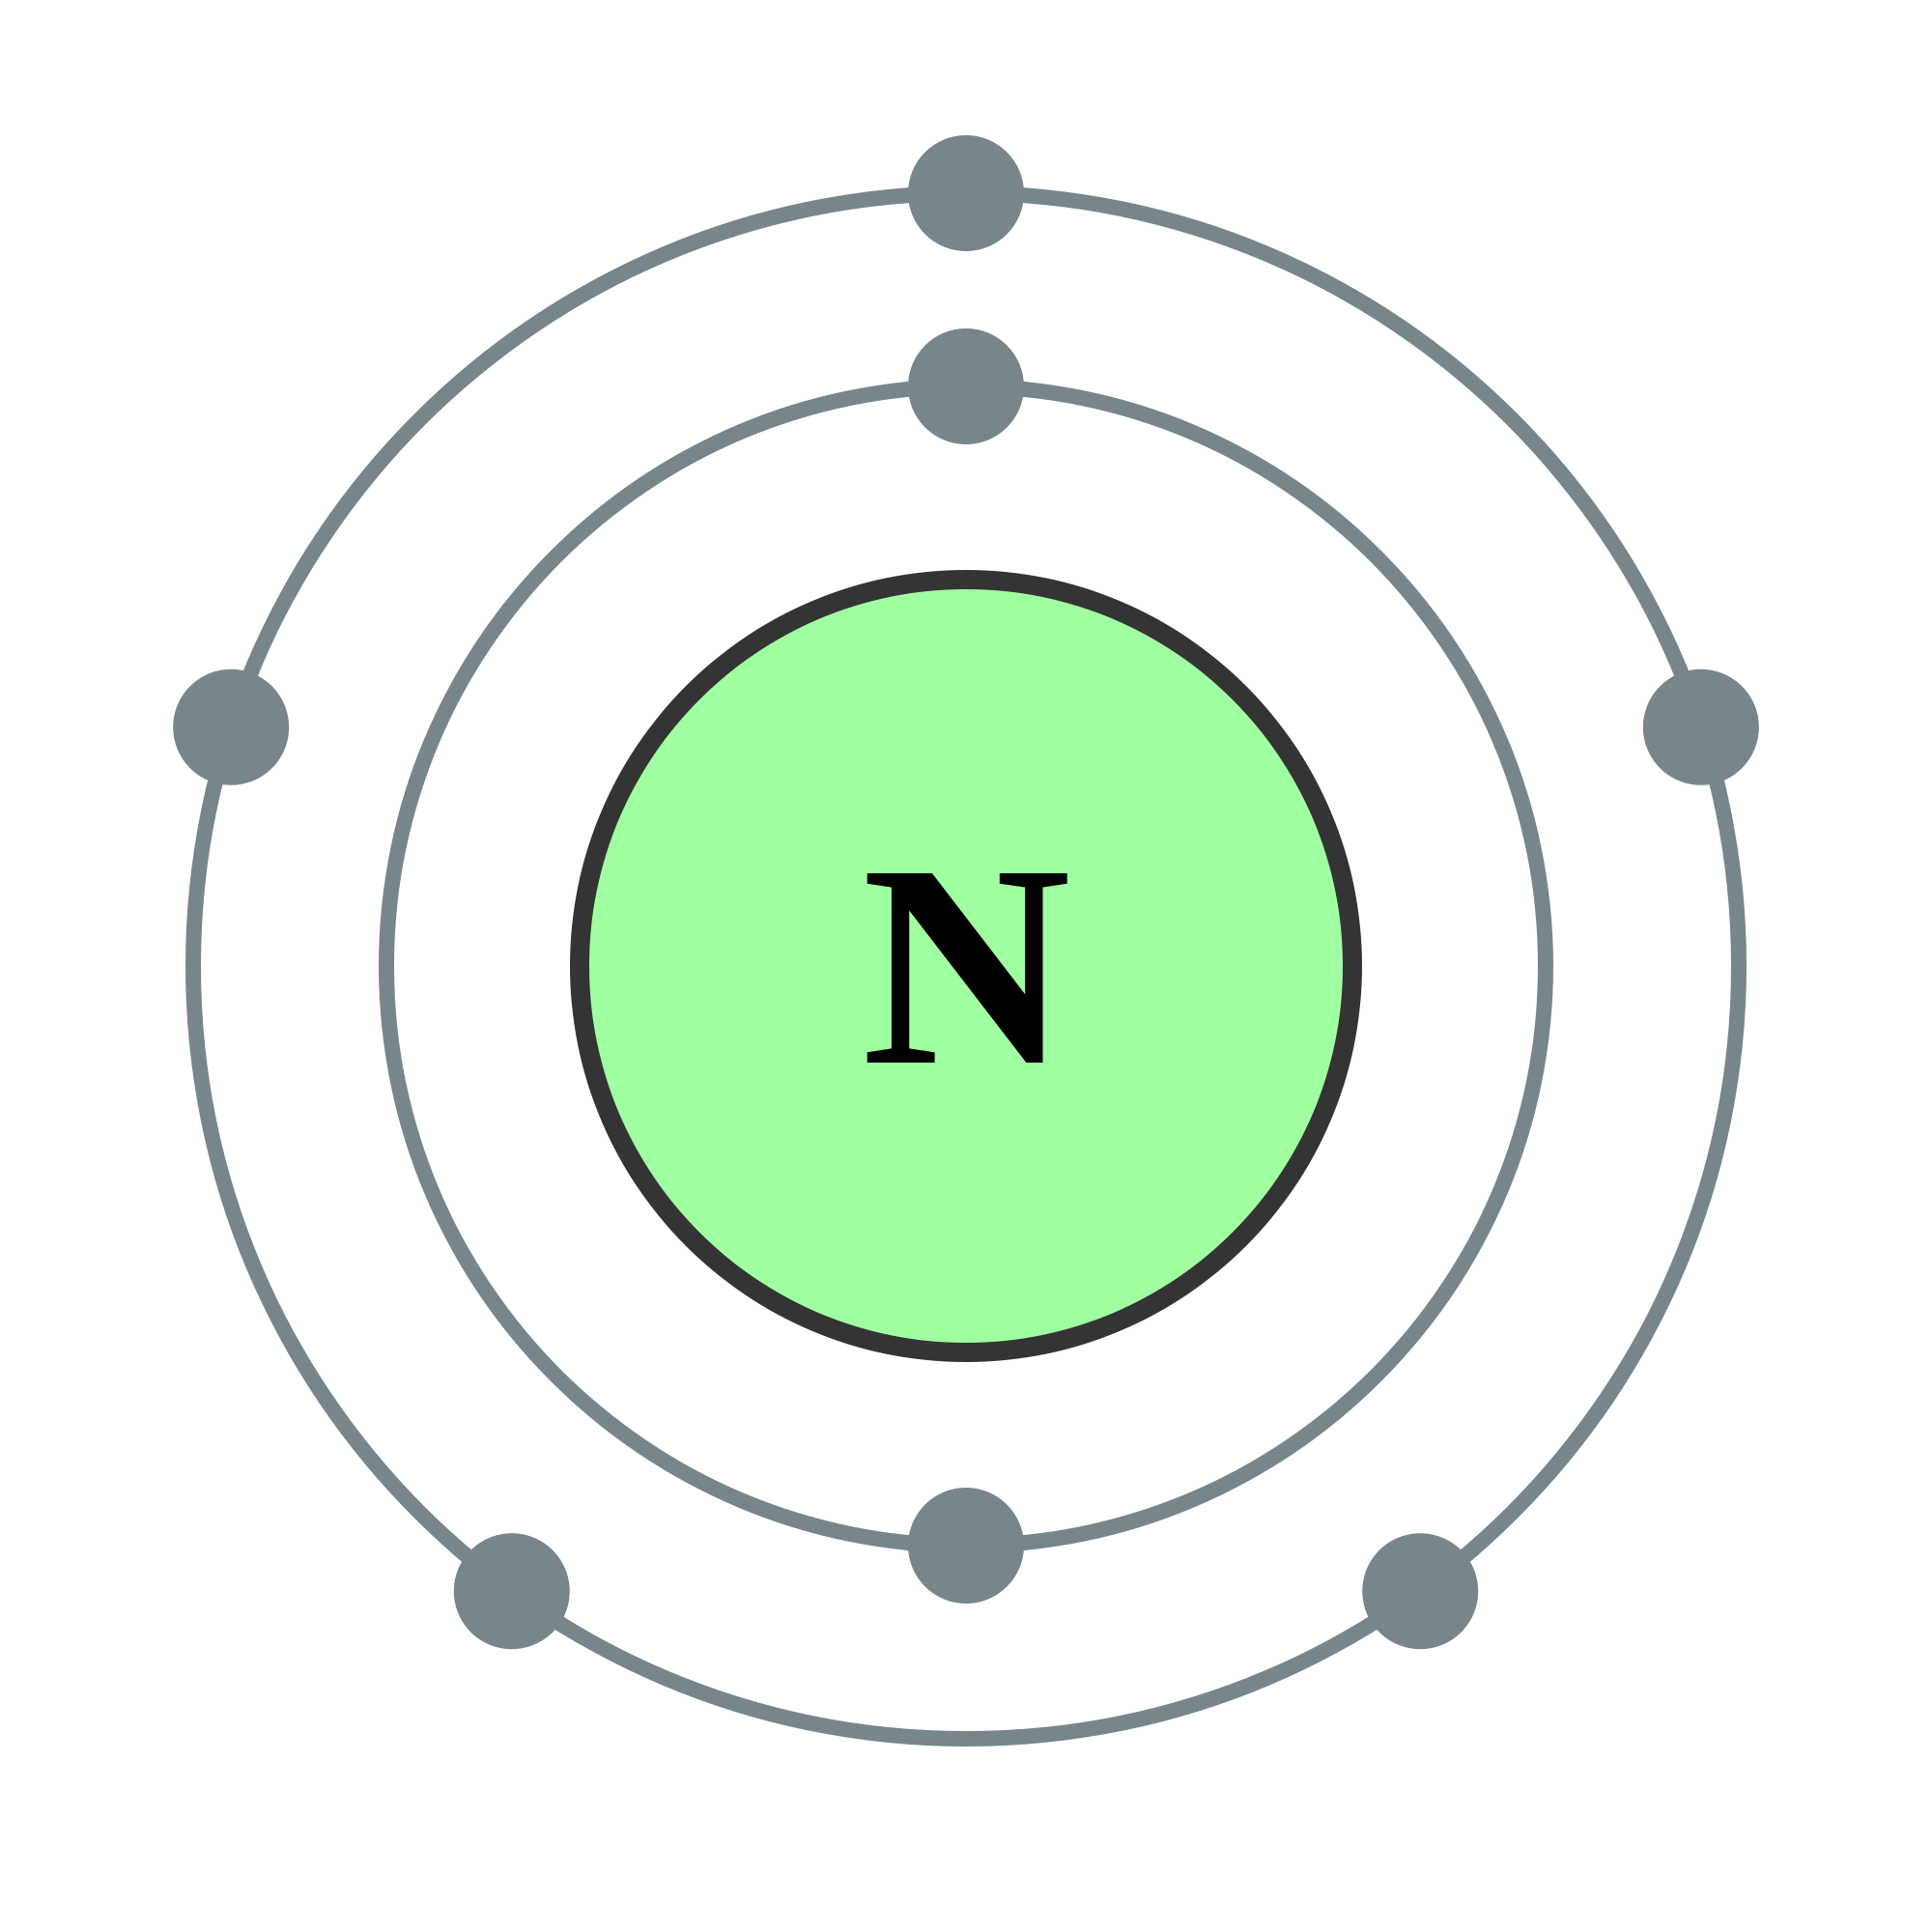 N2 neues Logo